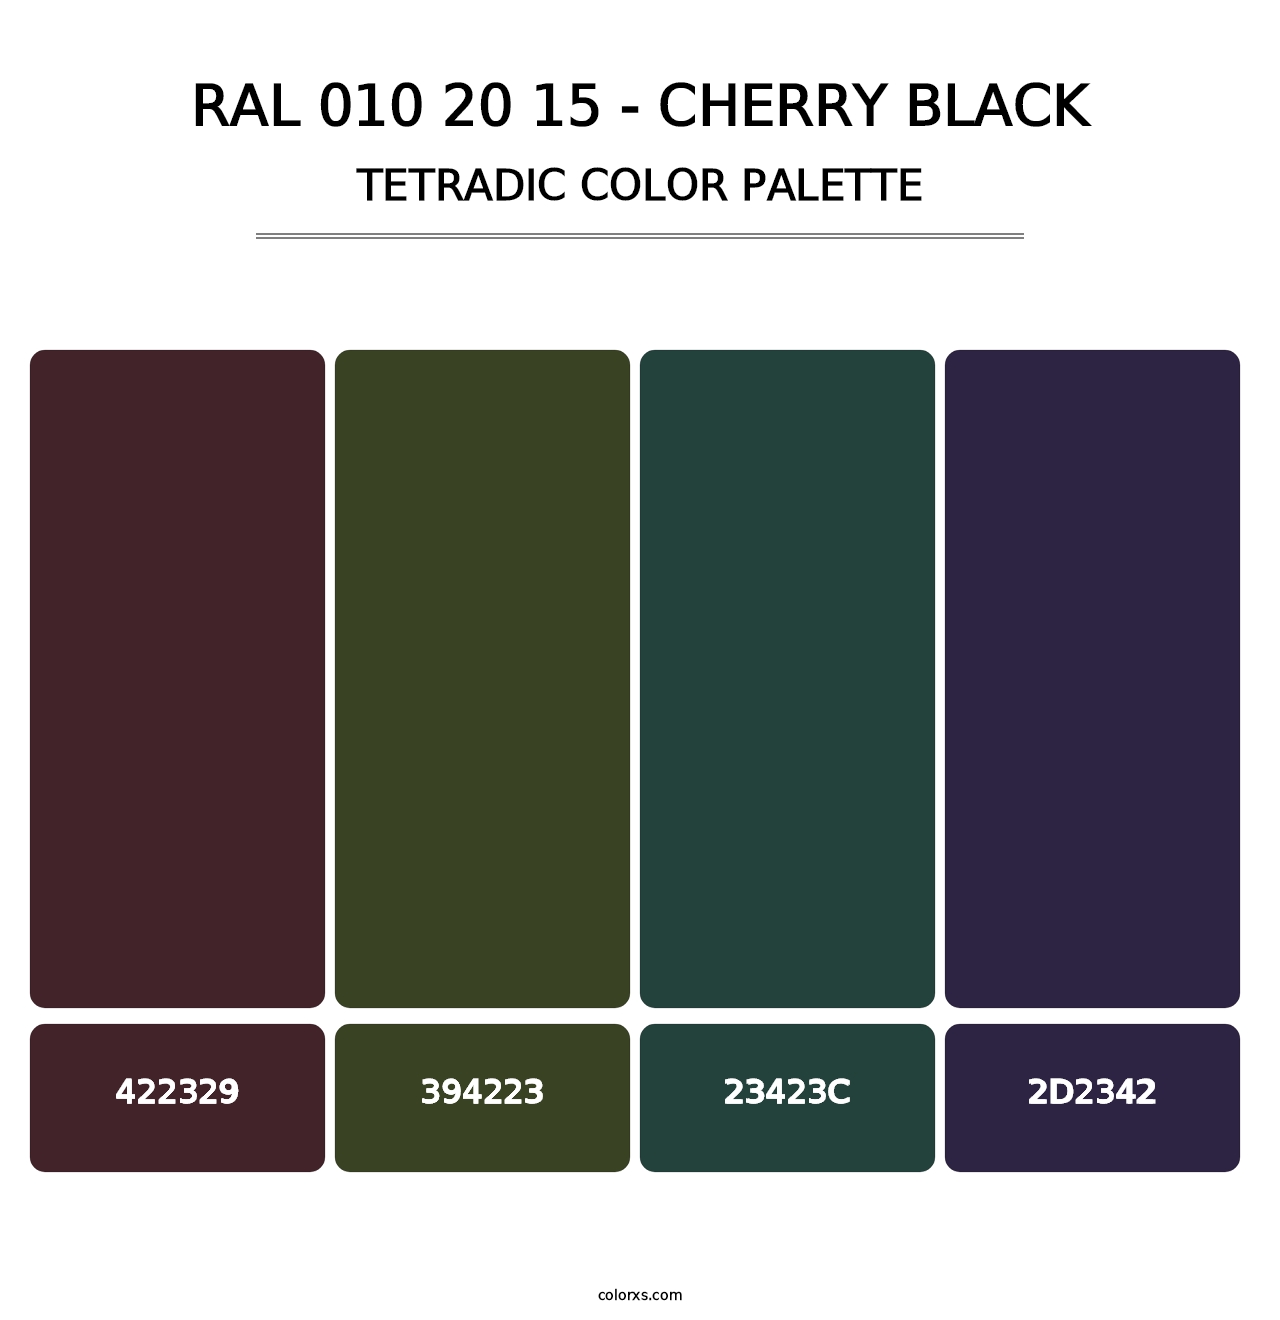 RAL 010 20 15 - Cherry Black - Tetradic Color Palette